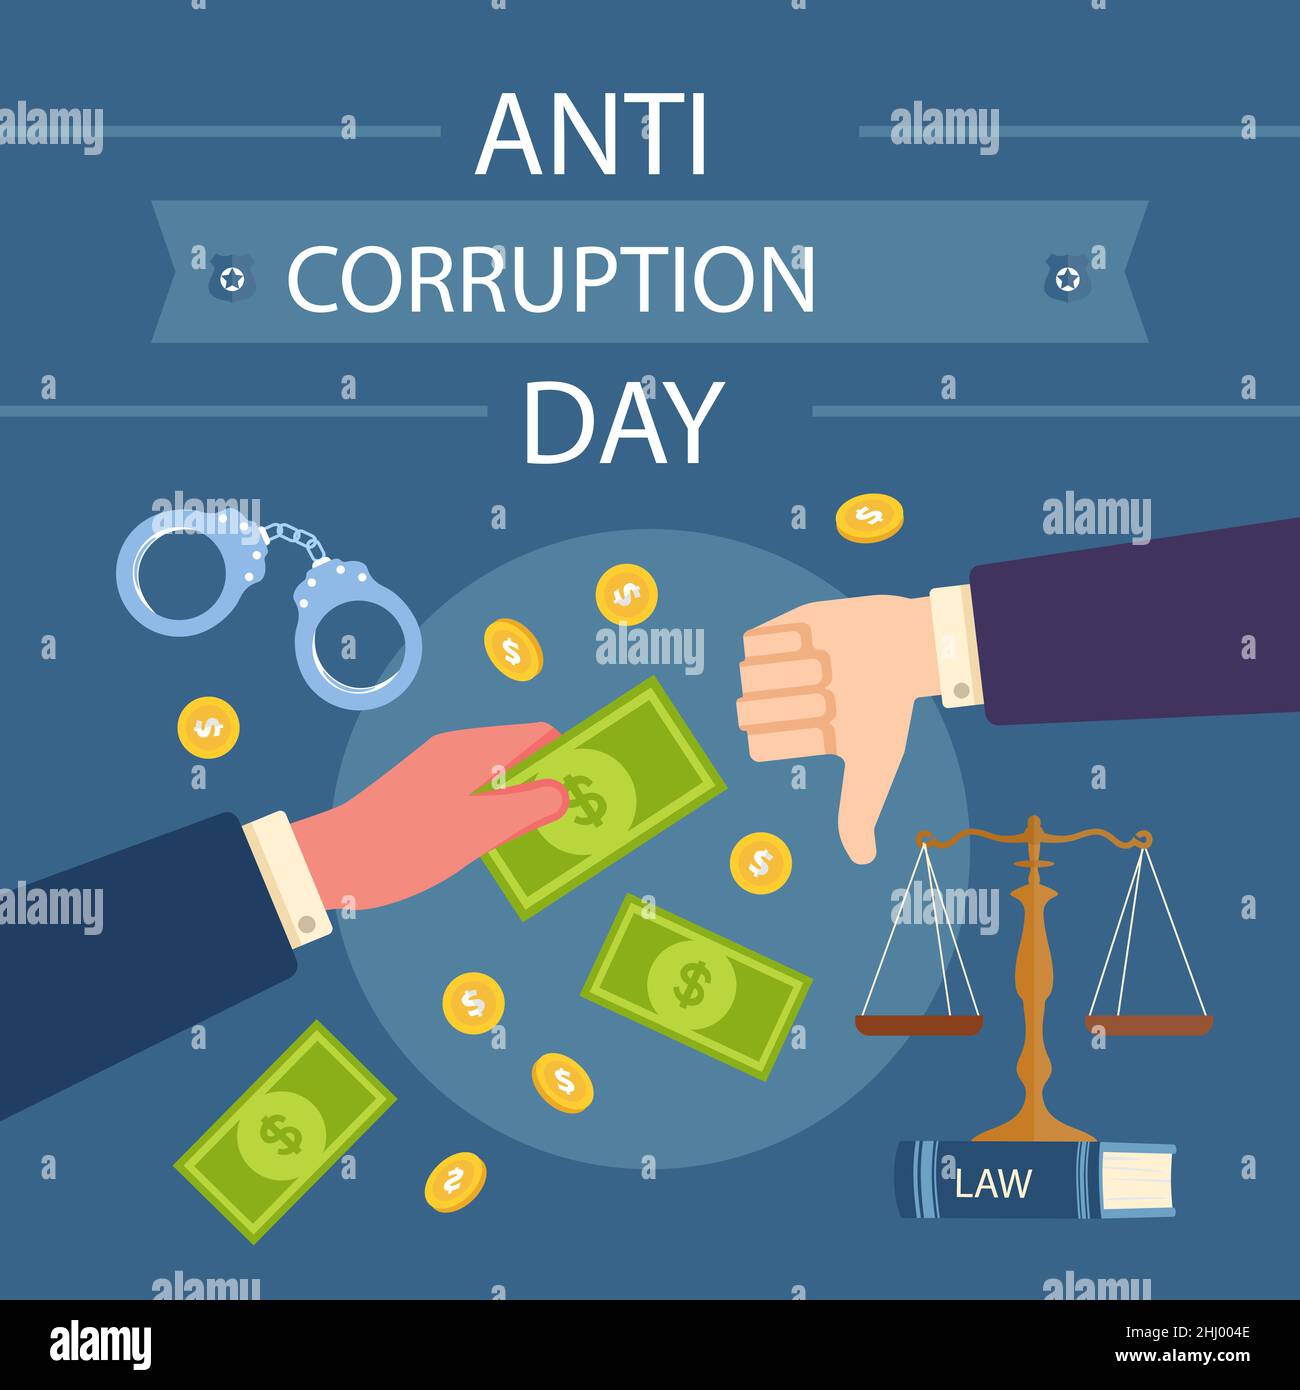 Flat anti corruption day illustration Vector illustration. Stock Vector